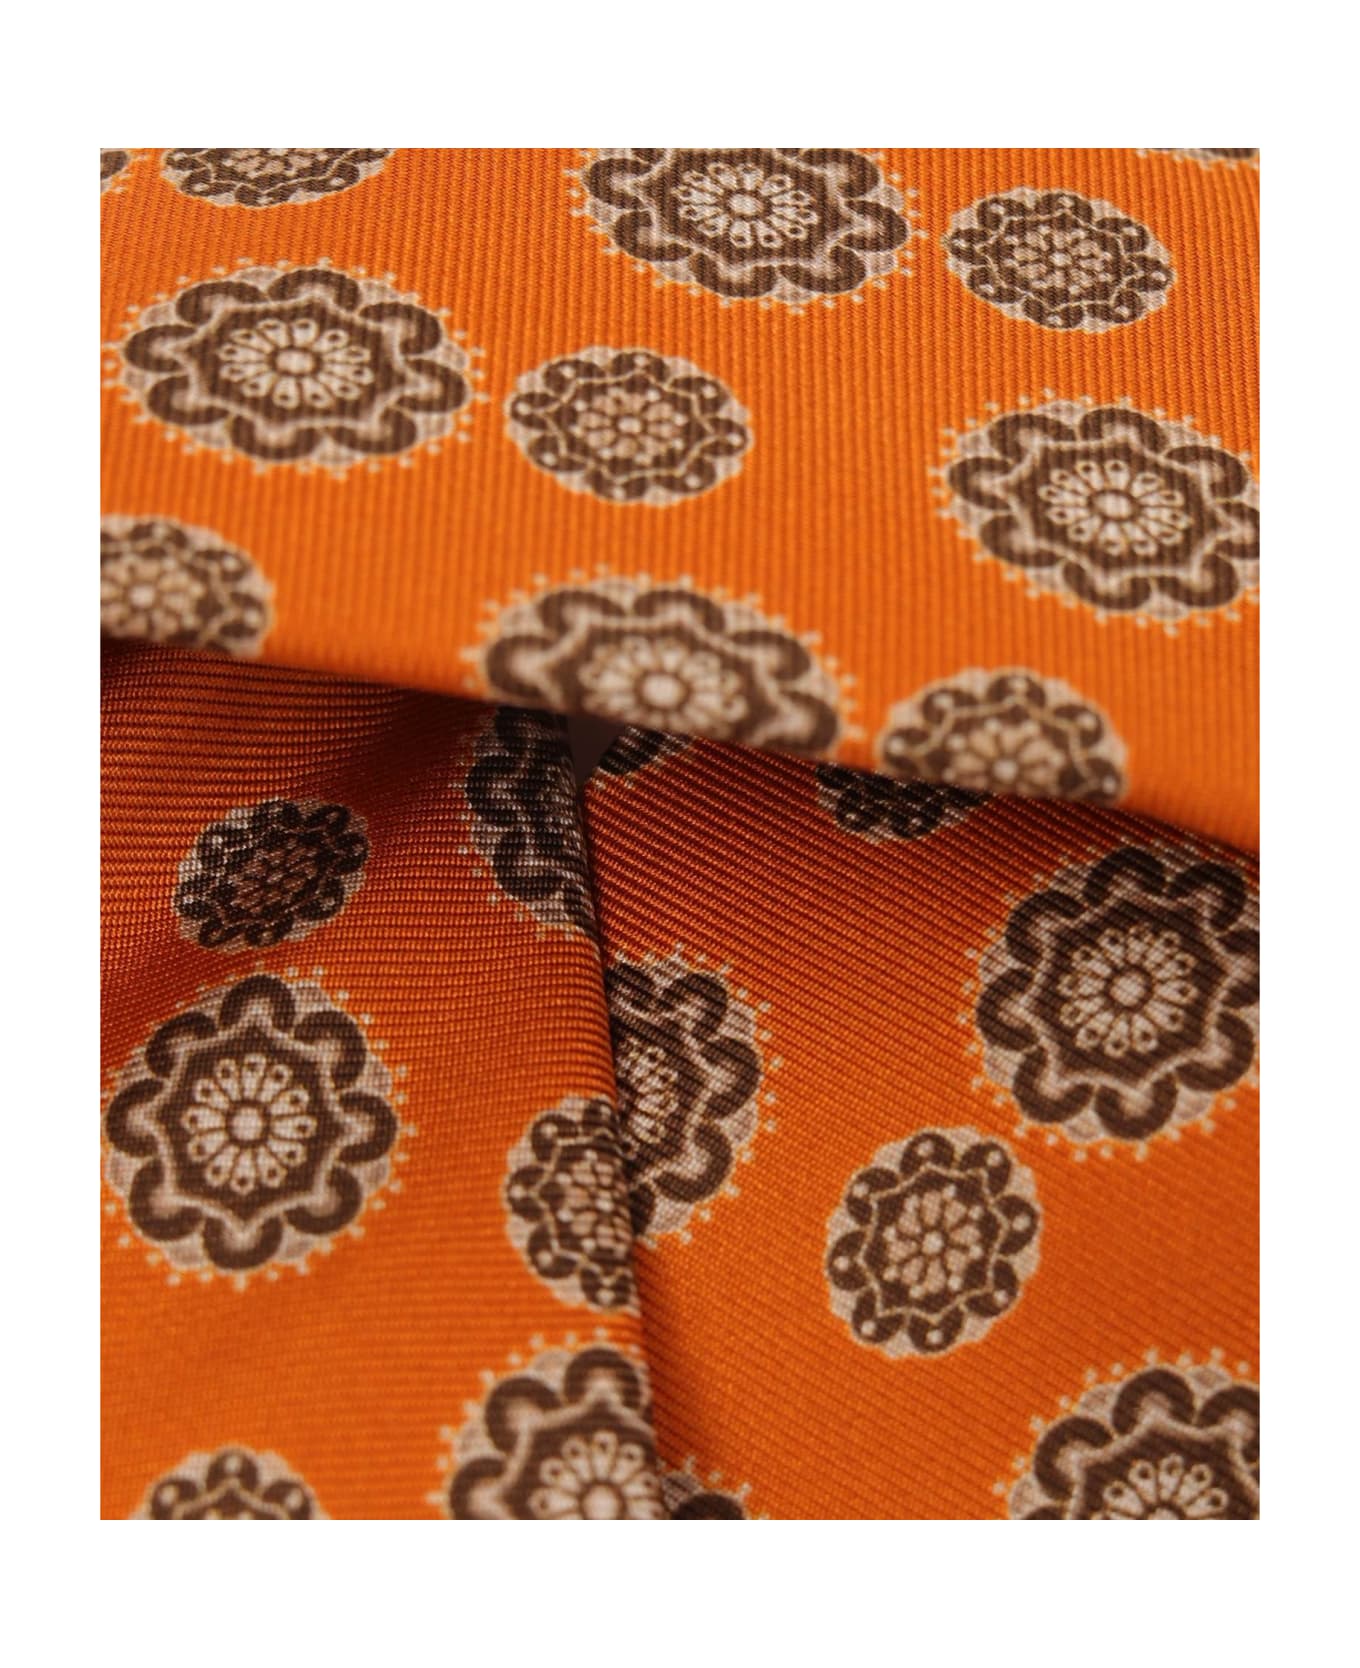 Larusmiani Tie 'arabesque' Tie - Orange ネクタイ